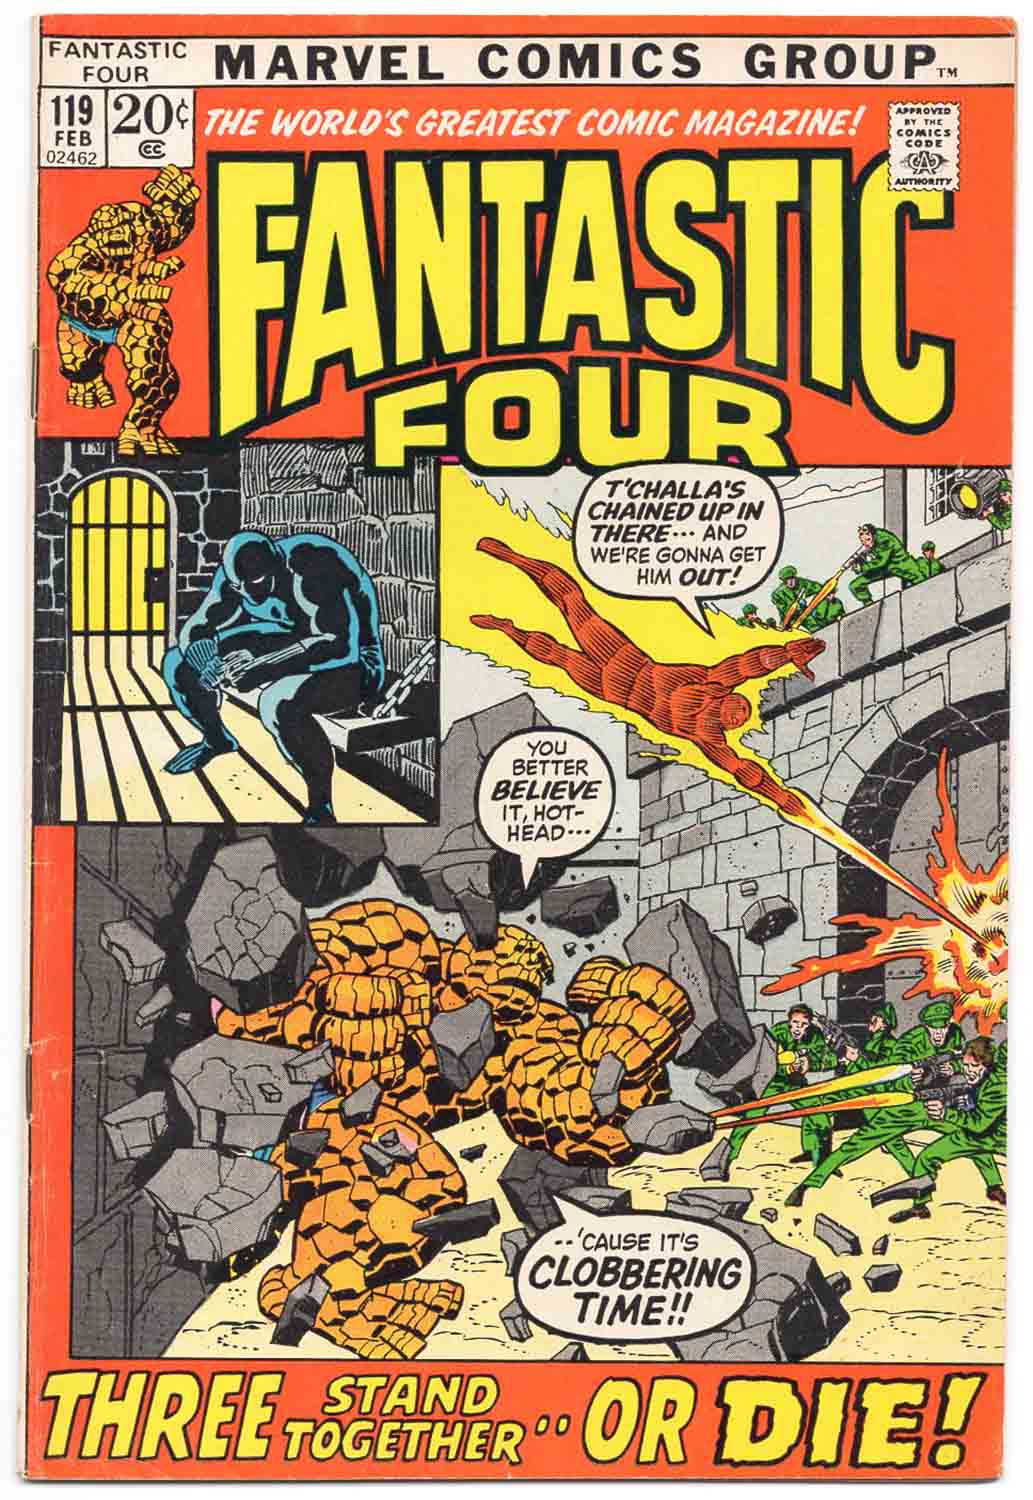 Fantastic Four #119